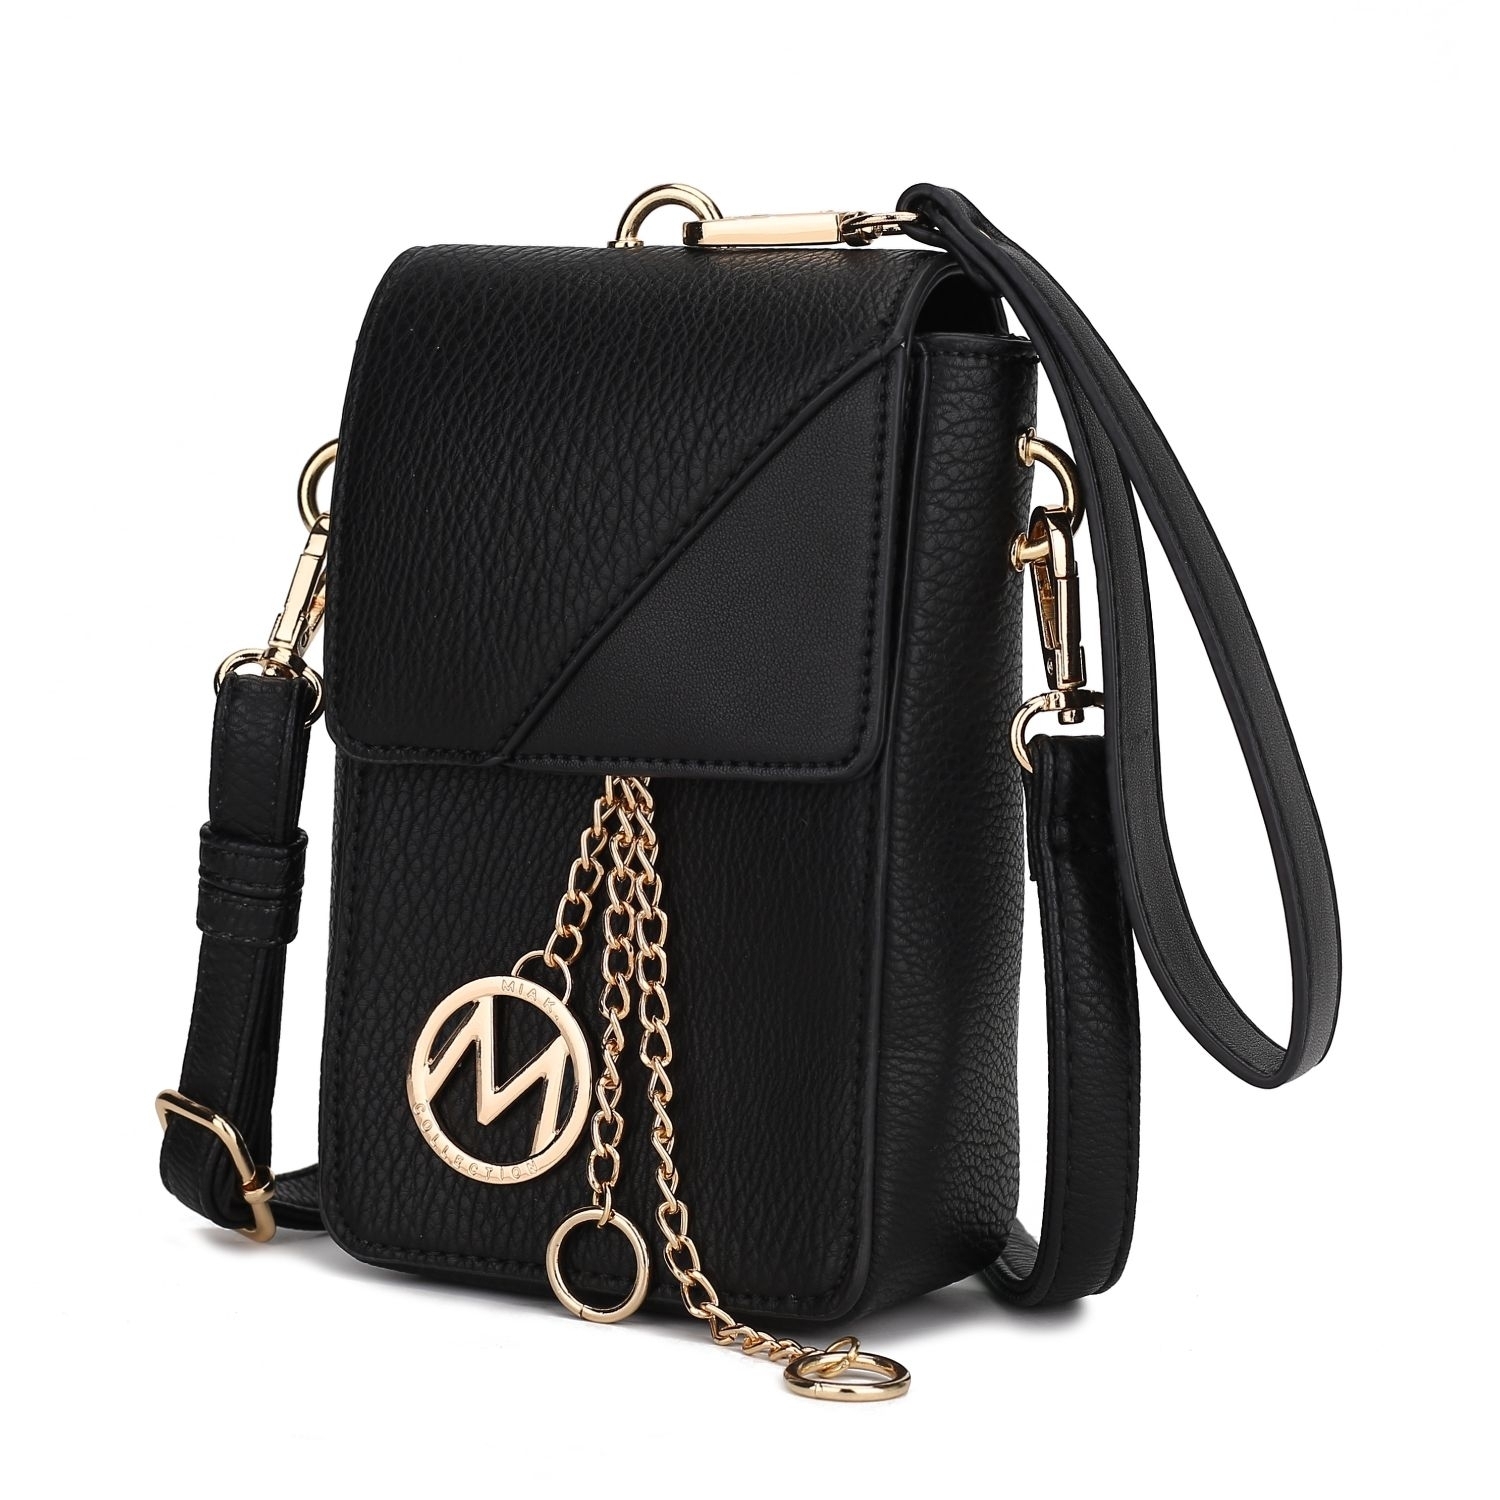 MKF Collection Hannah Crossbody & Wristlet Handbag By Mia K. - Pewter Black